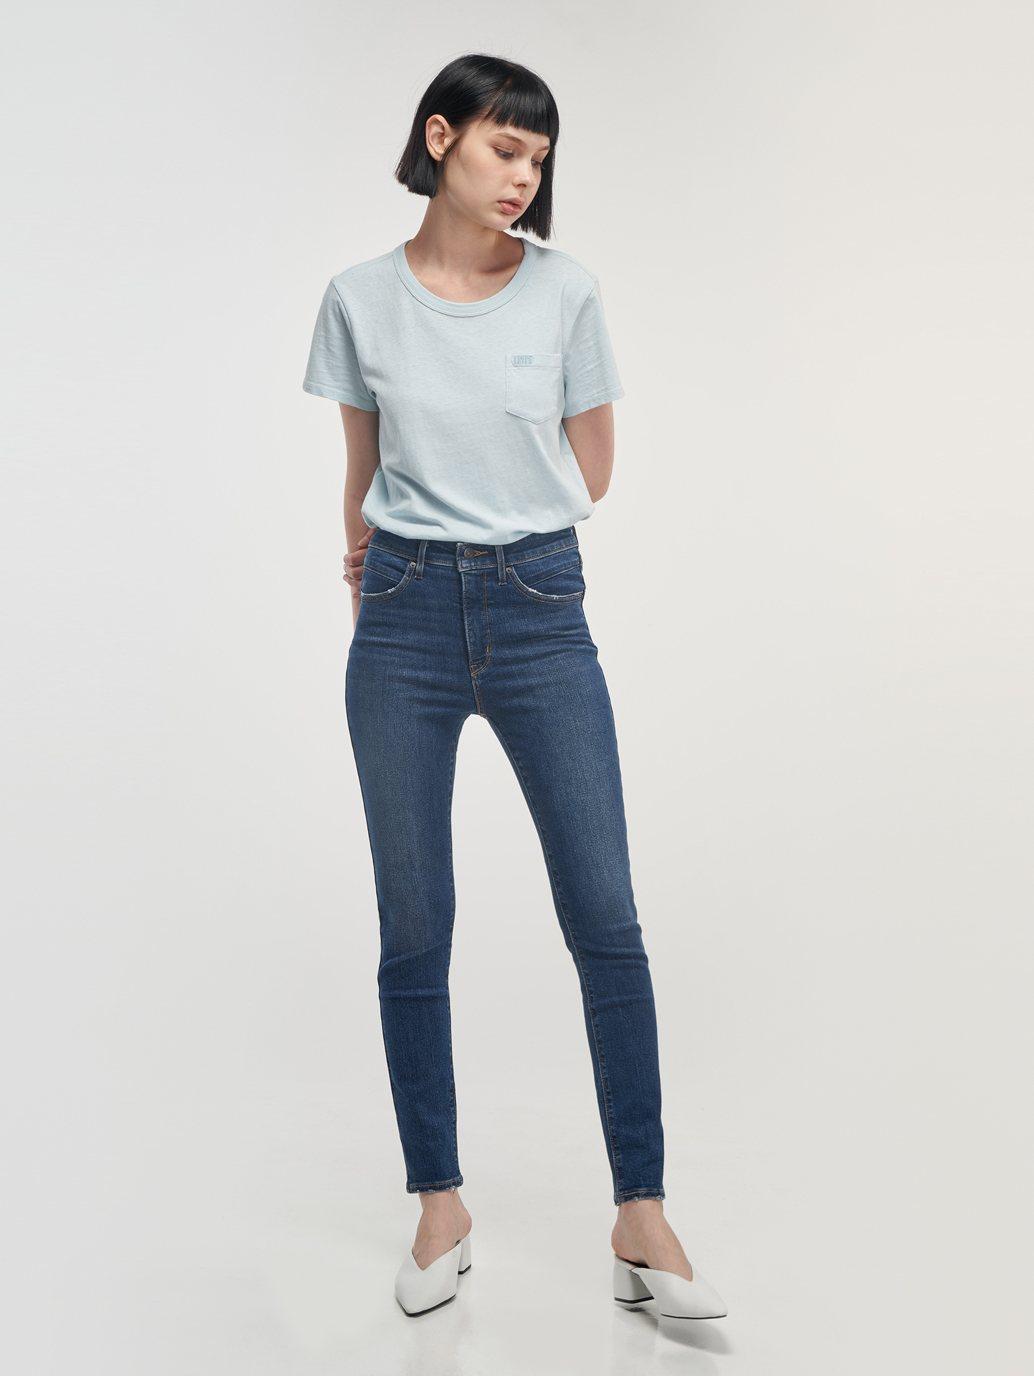 Levi's® Hong Kong womens revel shaping high rise skinny new jeans 748960024 13 Details